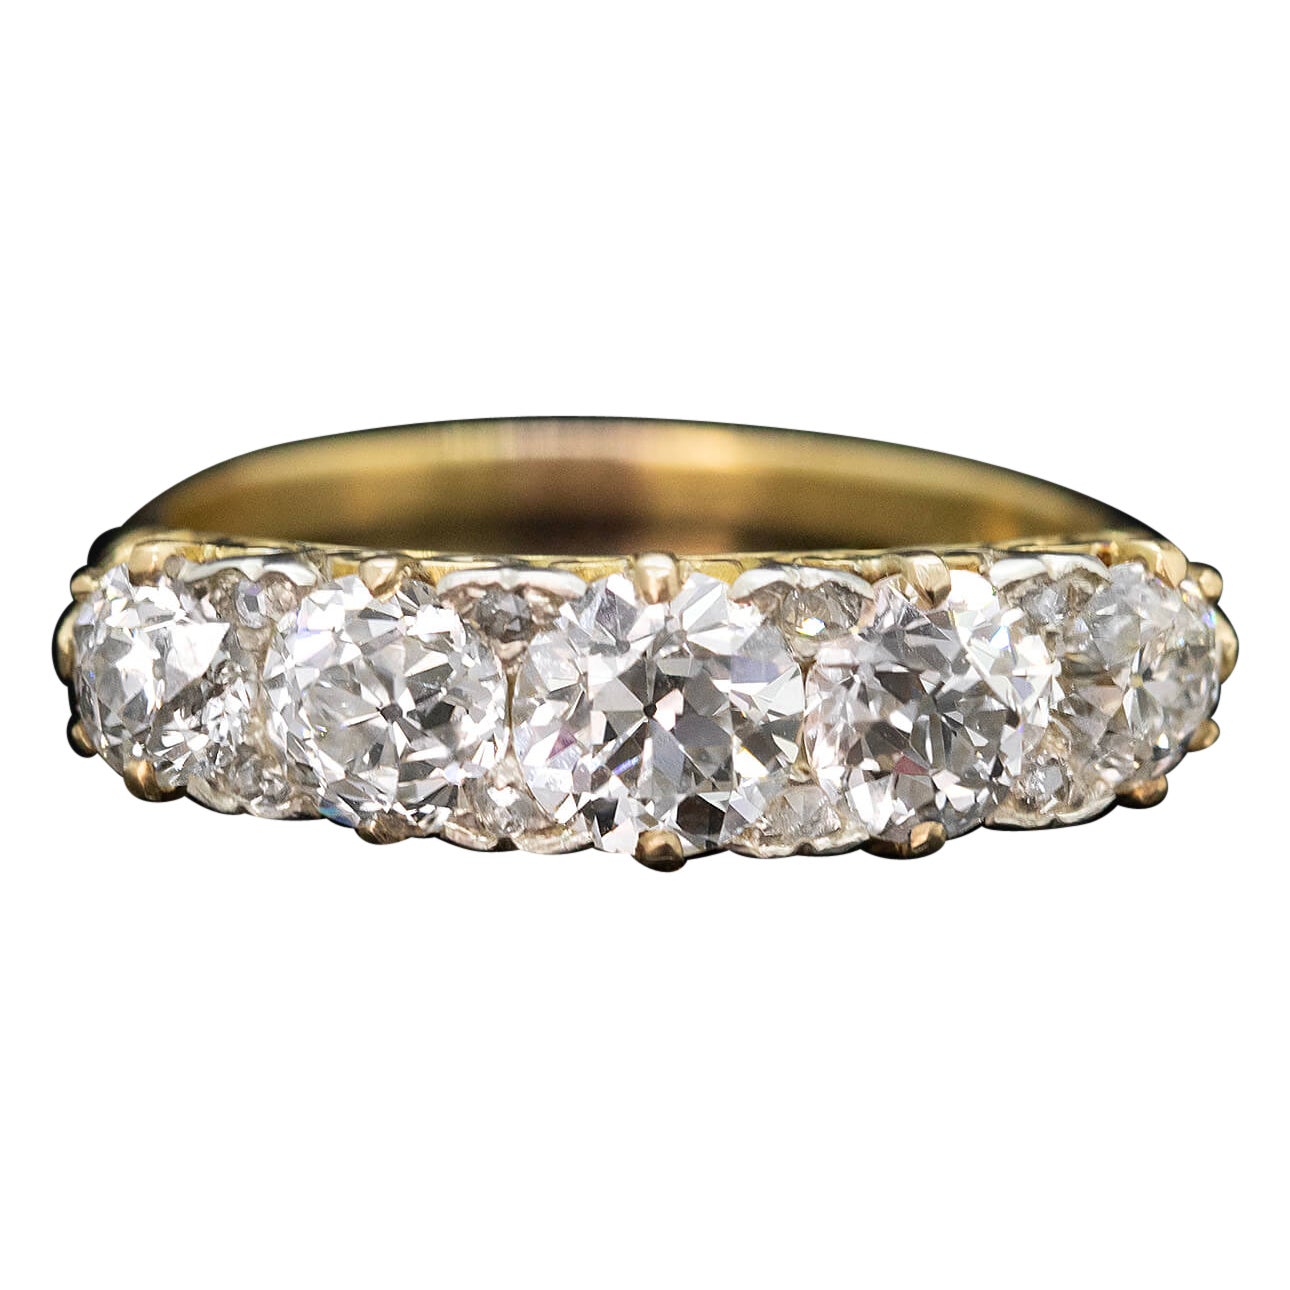 Victorian Style Diamond Half Hoop Ring Circa 2020s